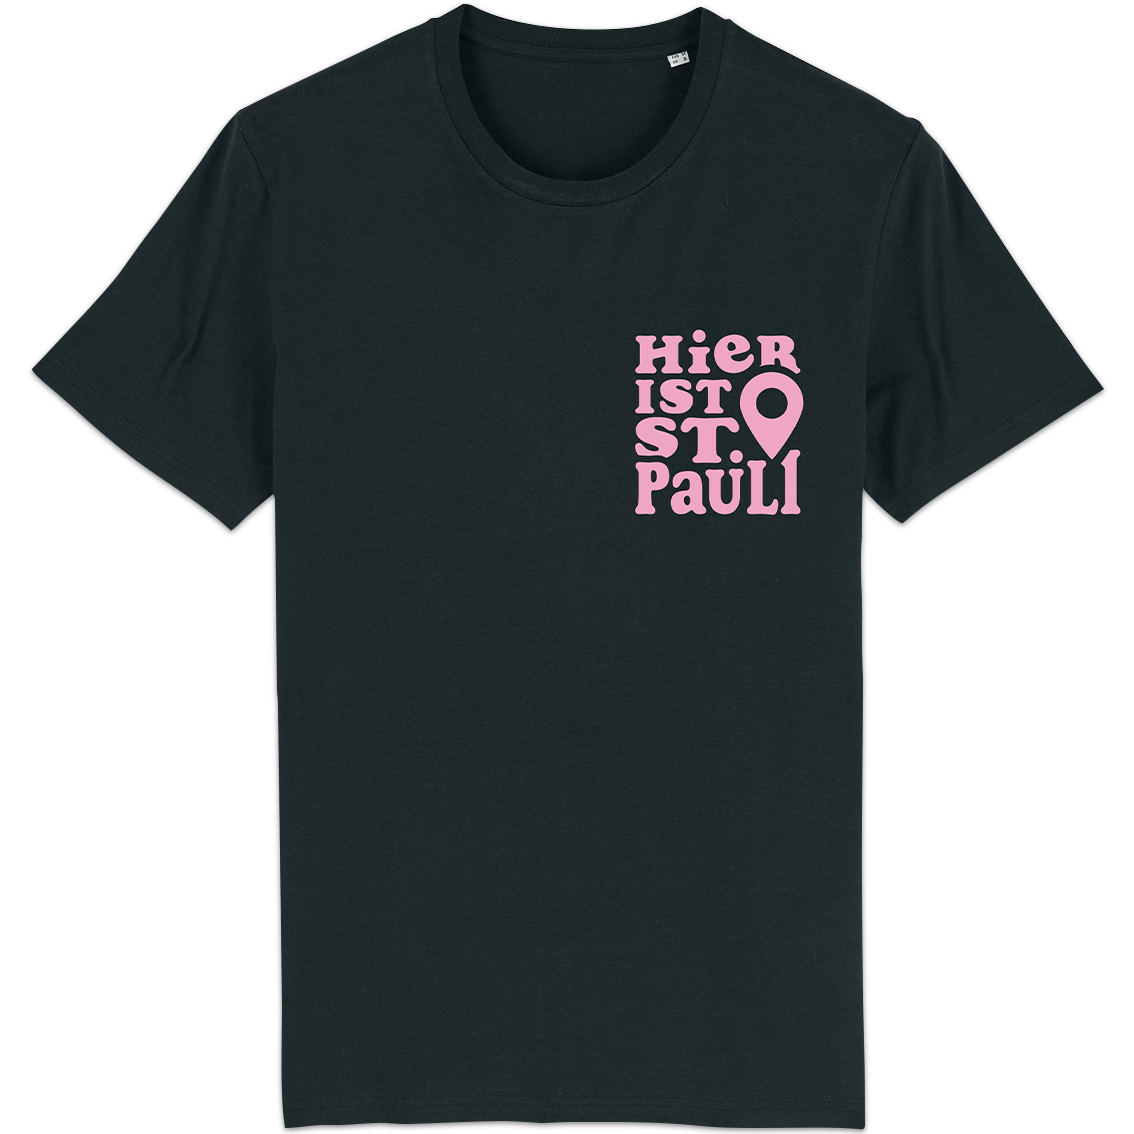 Shirt "Hier ist St. Pauli" pink on black